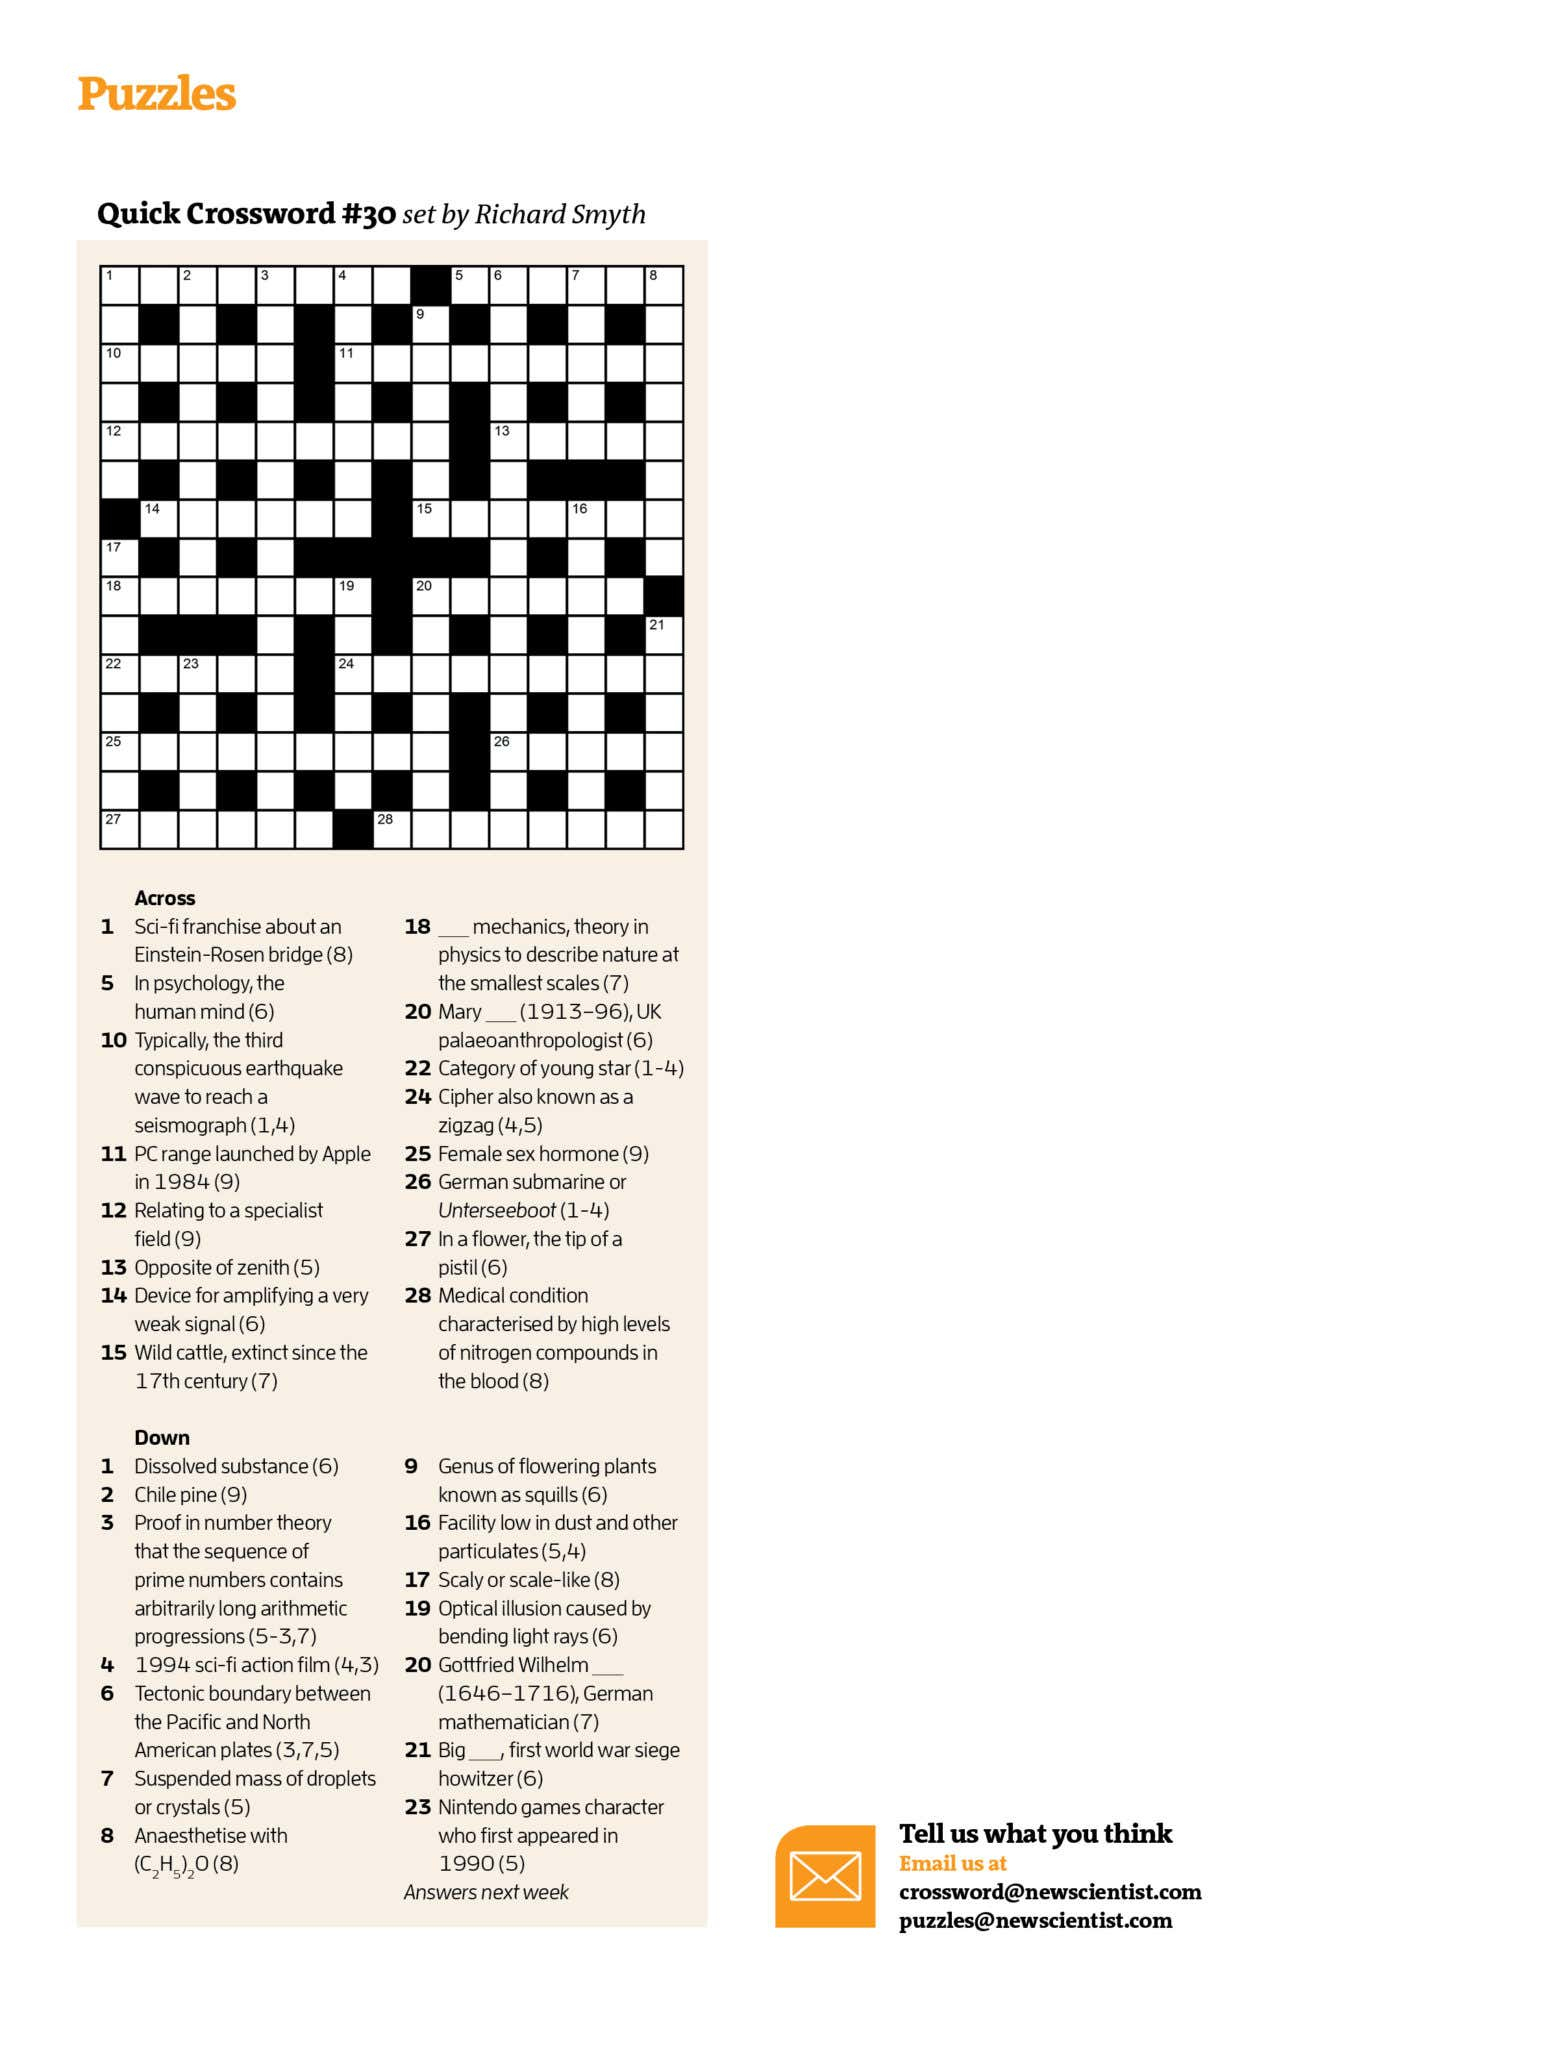 Quick Crossword #30 | New Scientist - Printable Quick Crossword